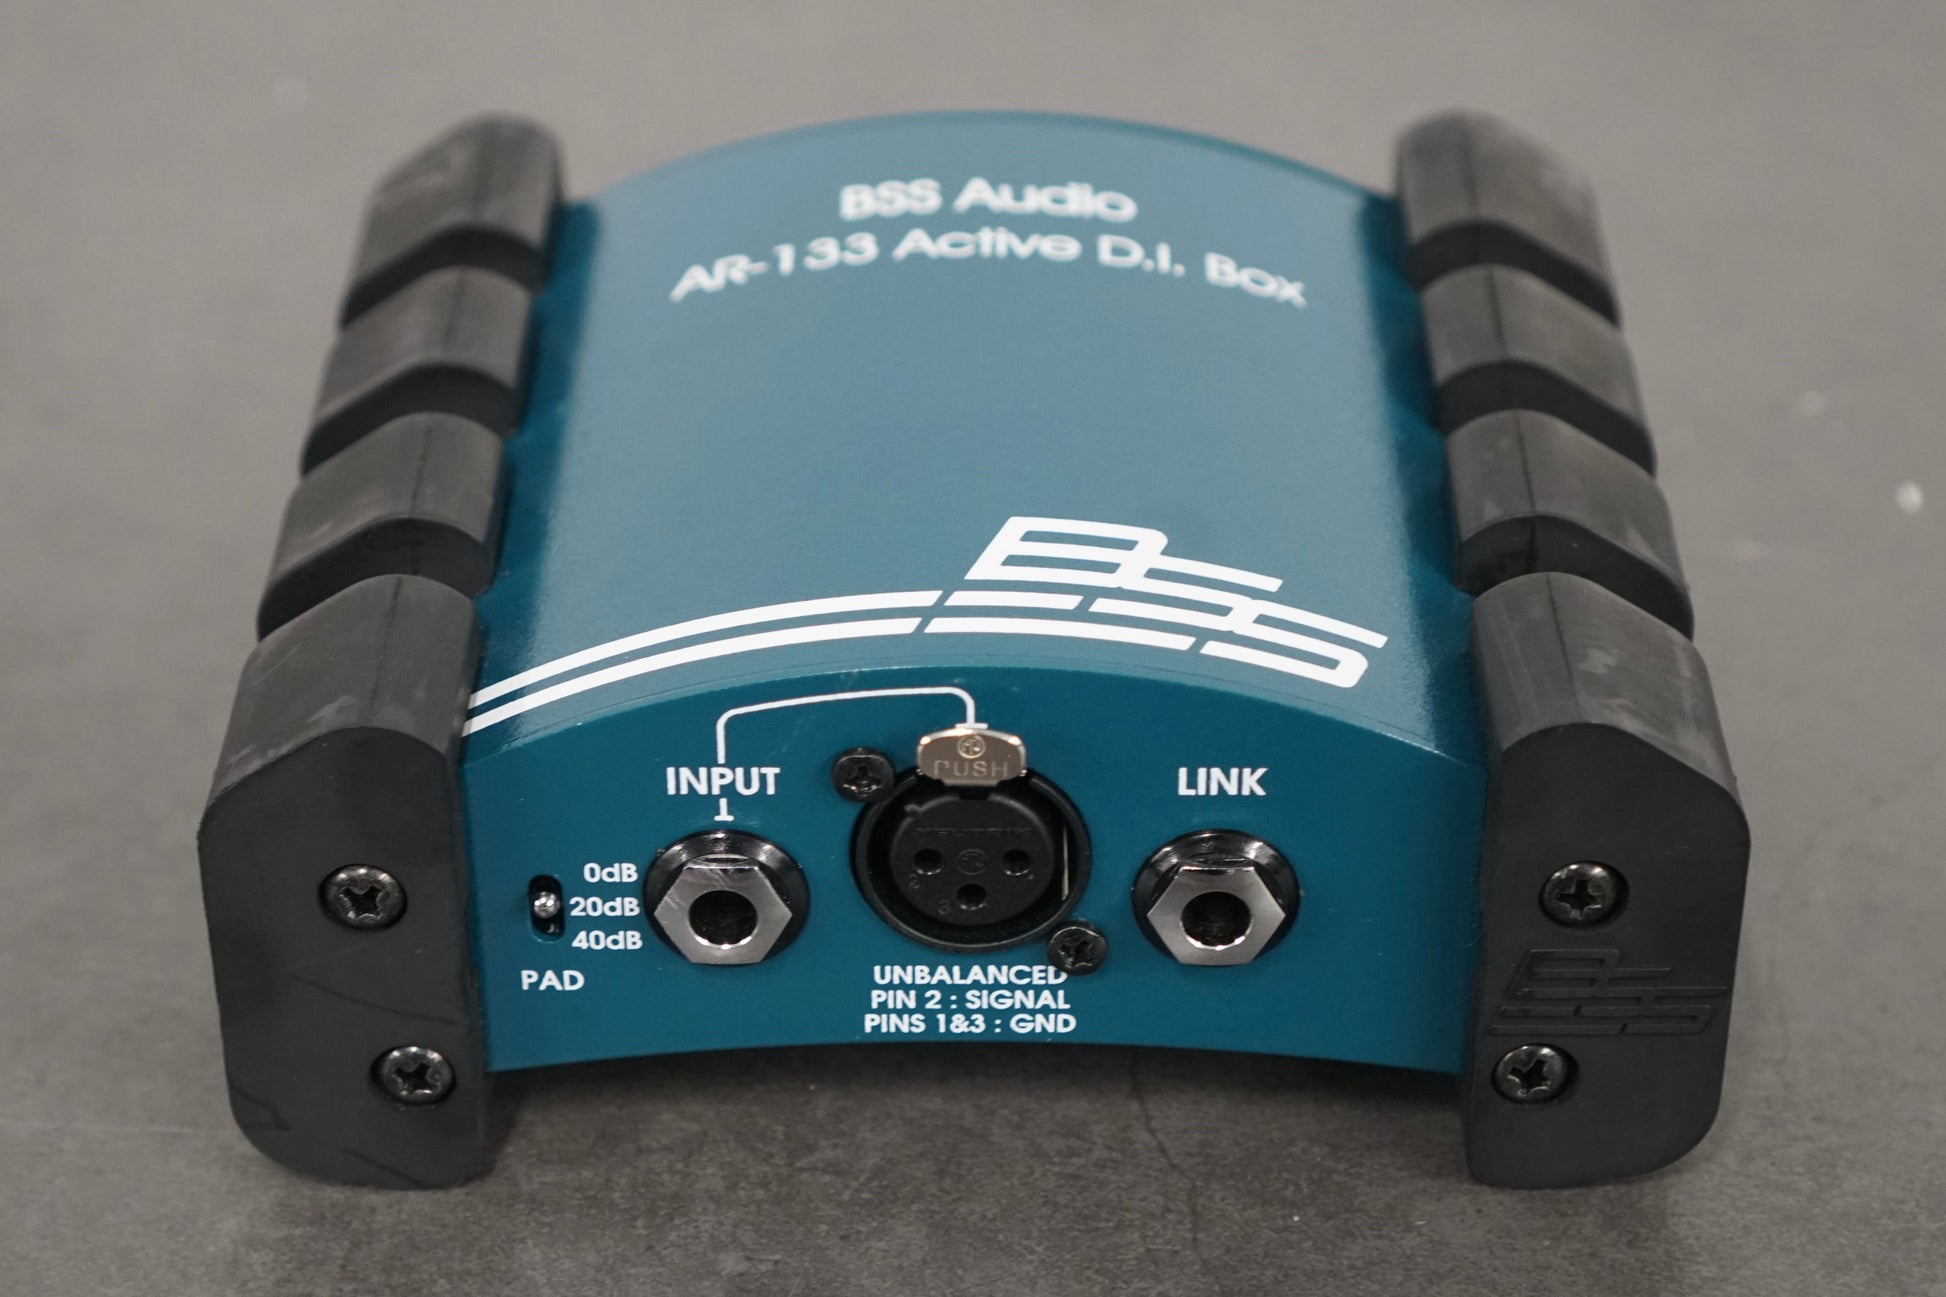 BSS Audio AR-133 Aktive DI-Box